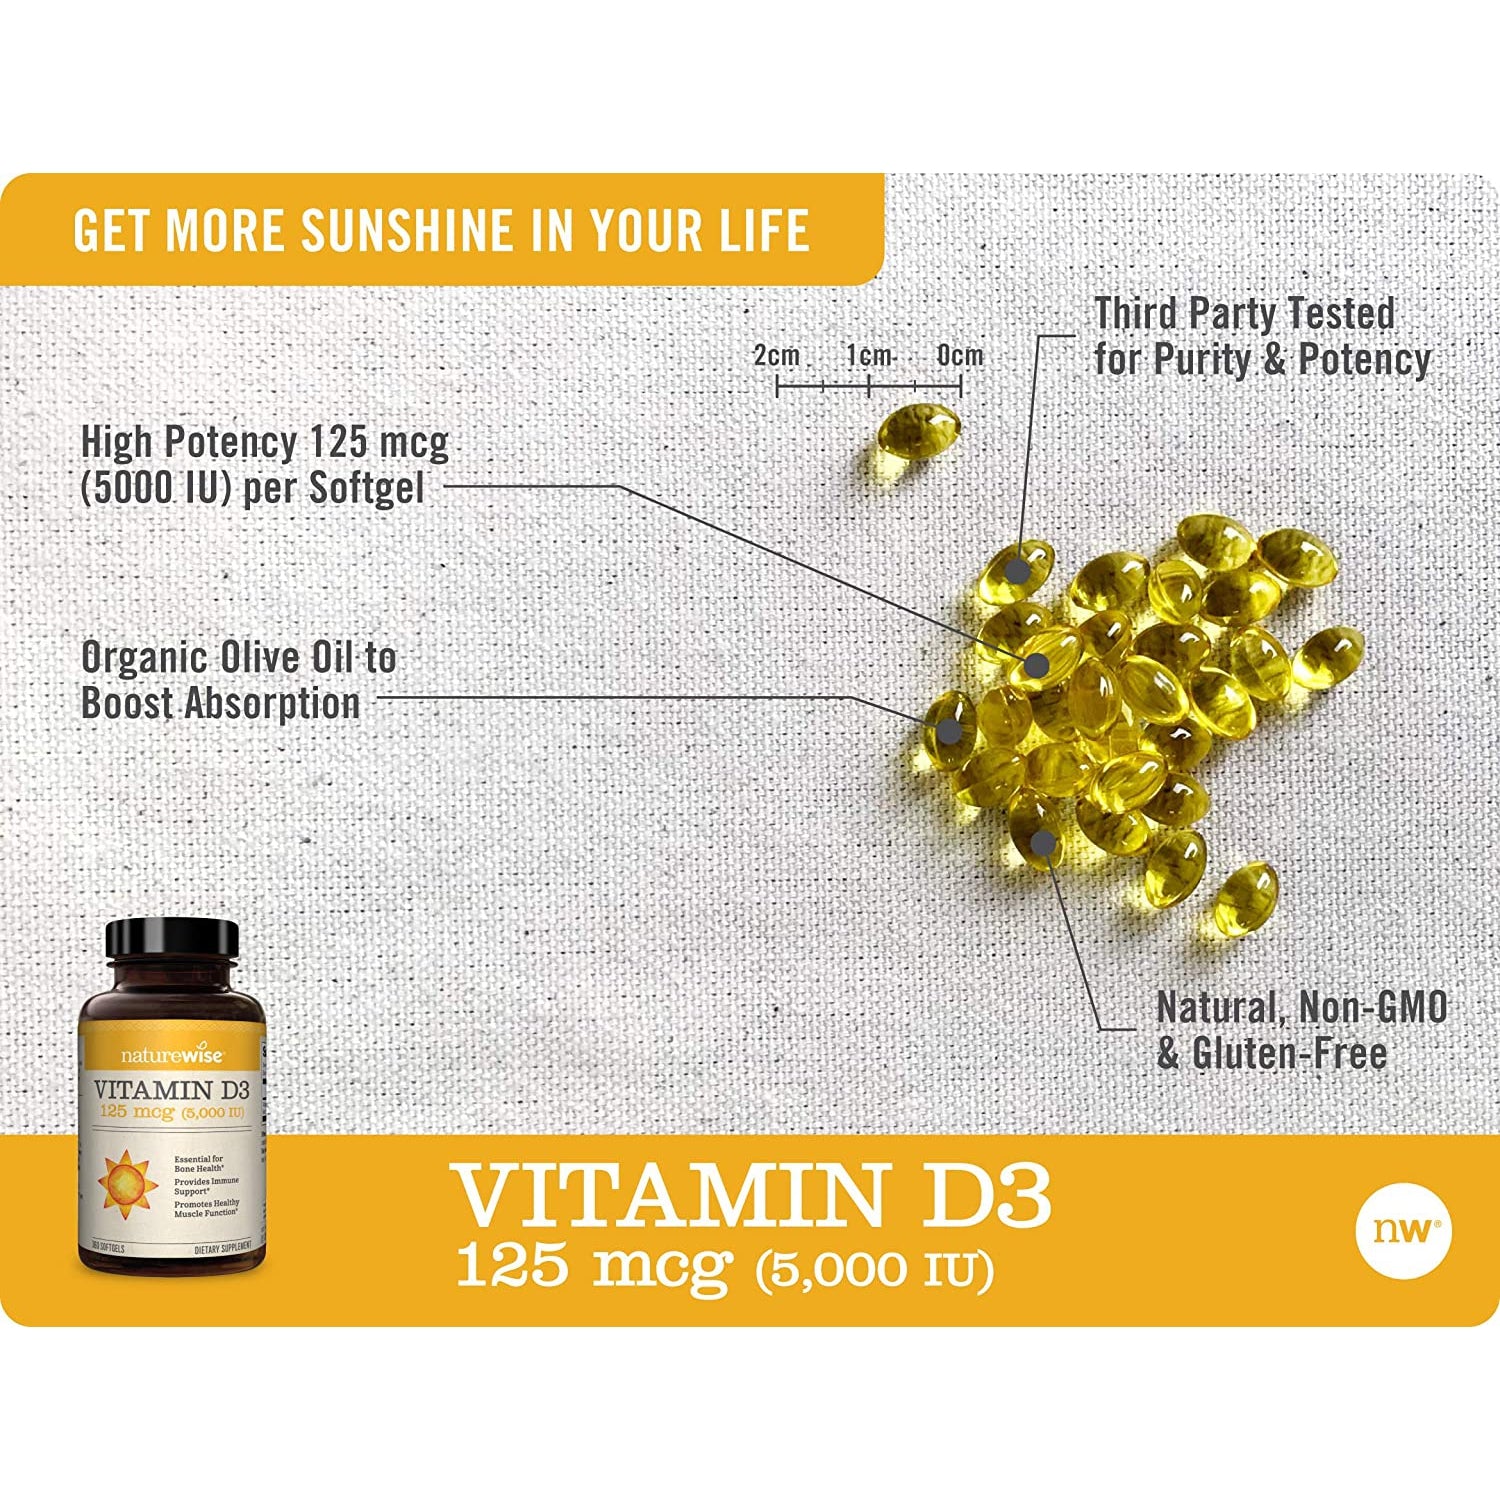 Naturewise Vitamin D3 5000Iu 1 Year Supply